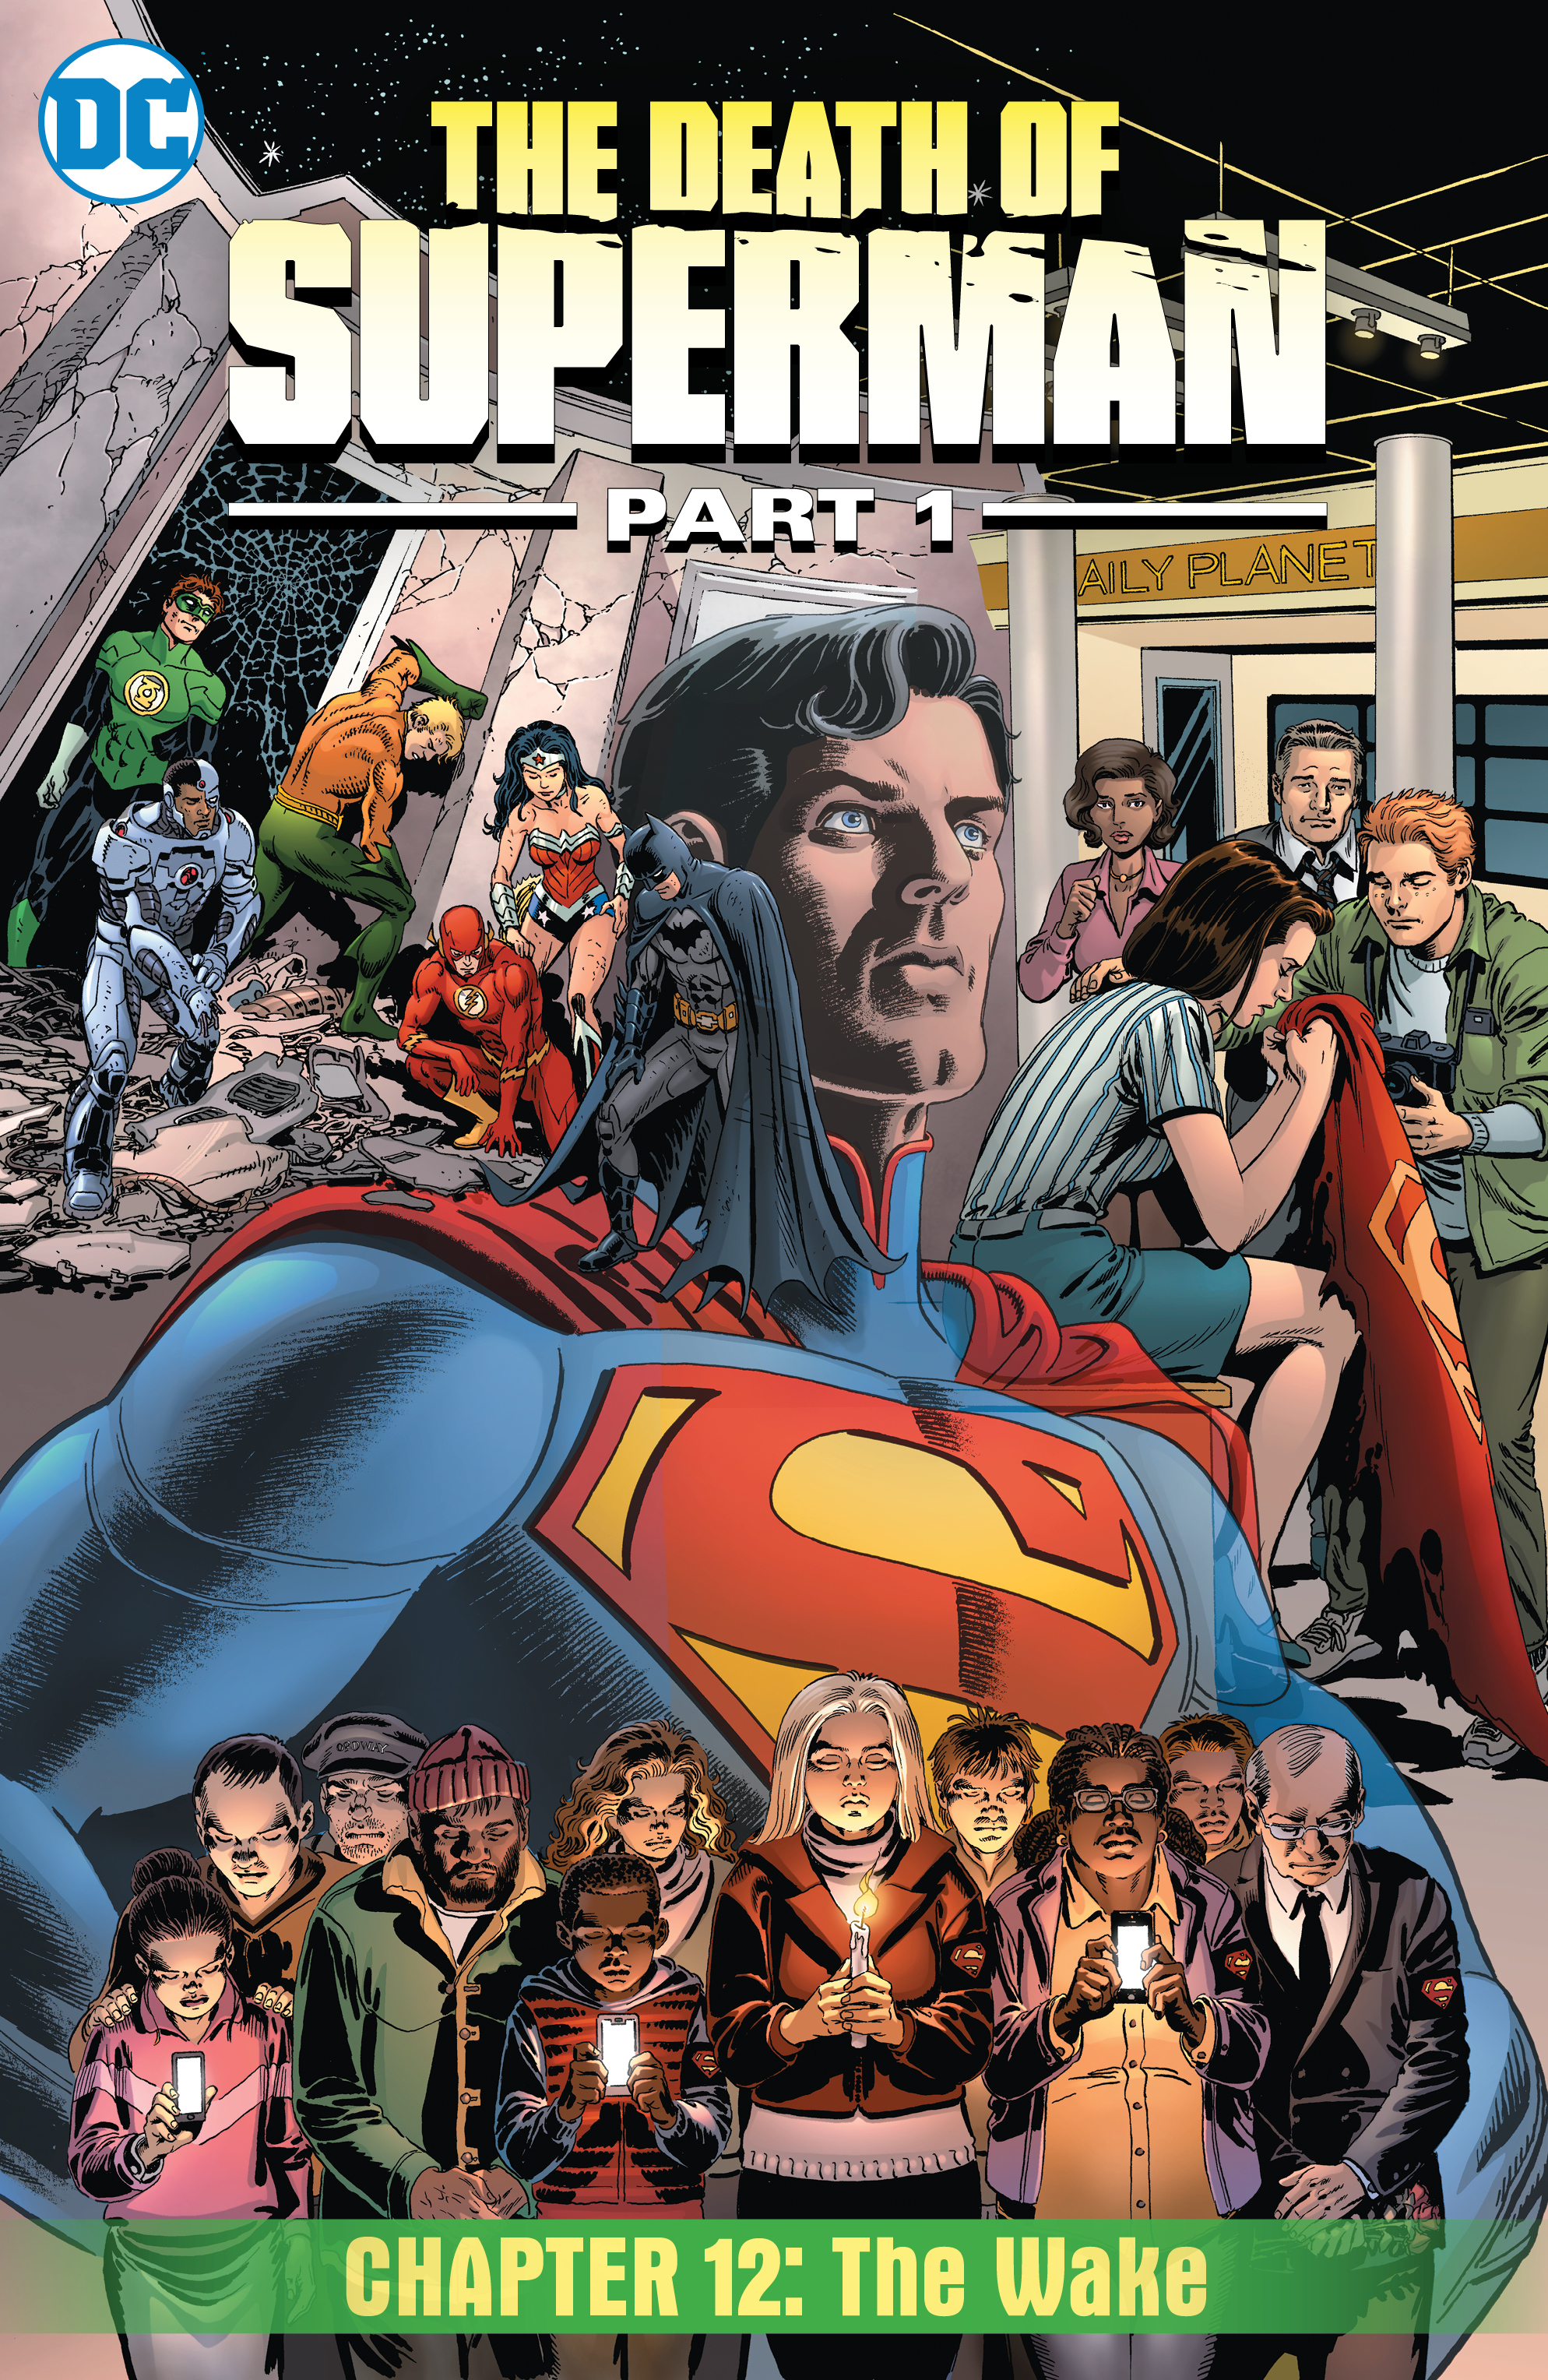 Death of Superman, Part 1 #12 preview images